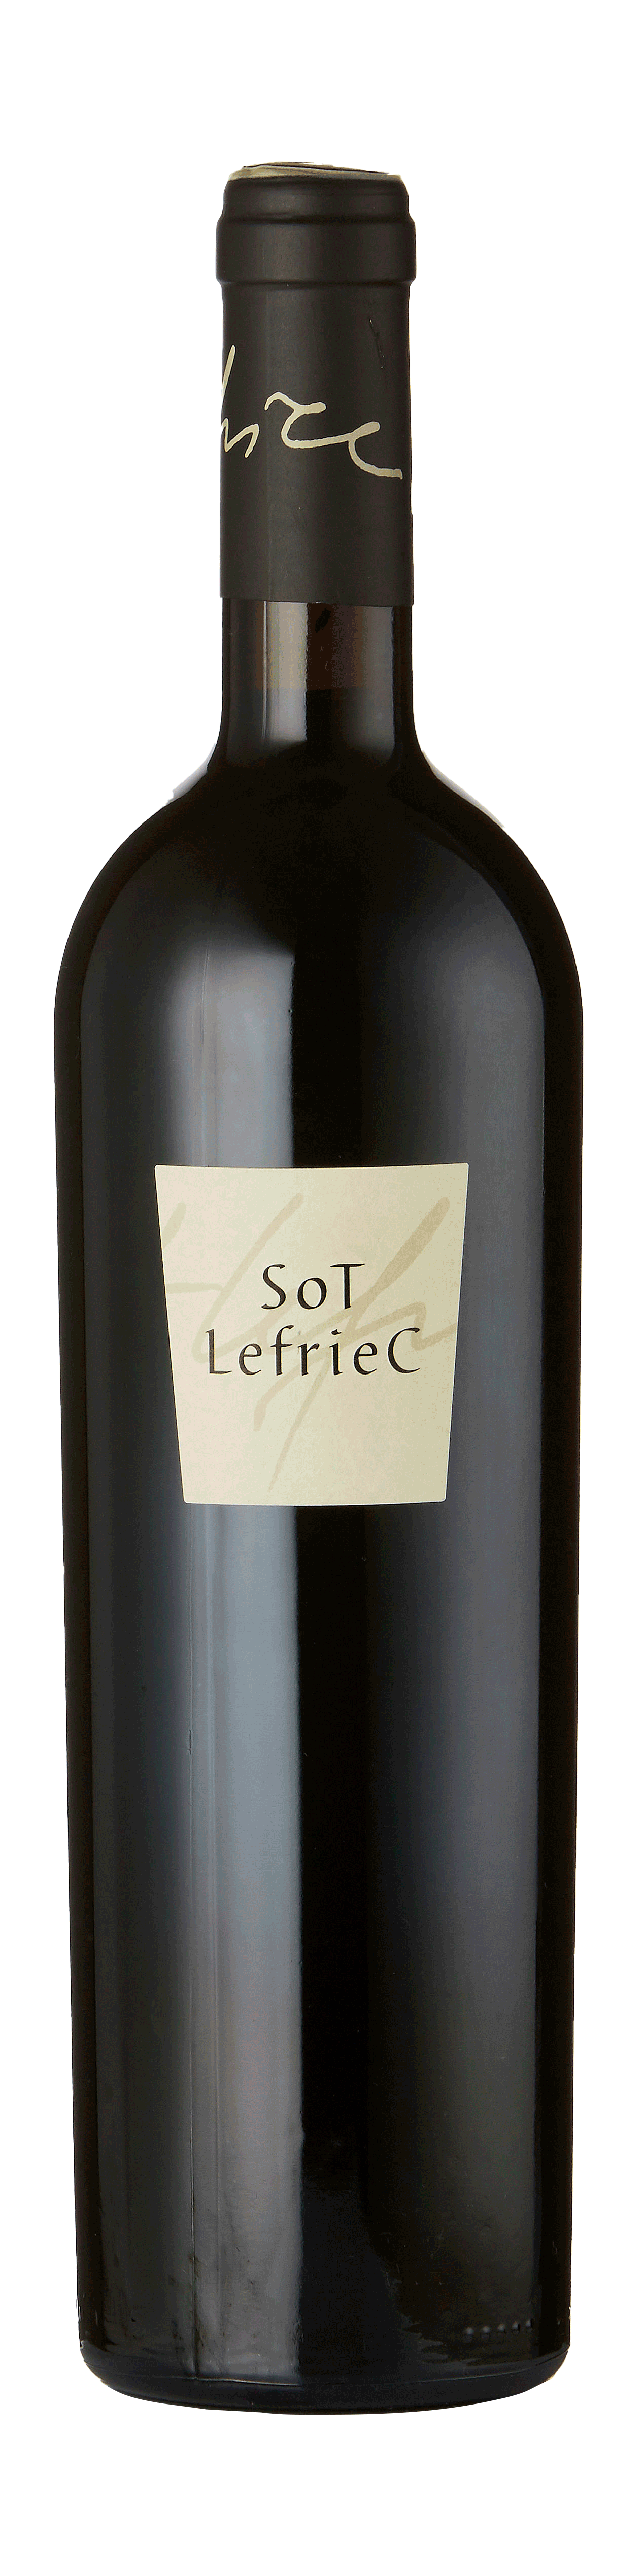 Bottle shot - Alemany I Corrió, Sot Lefriec, DO Penedès